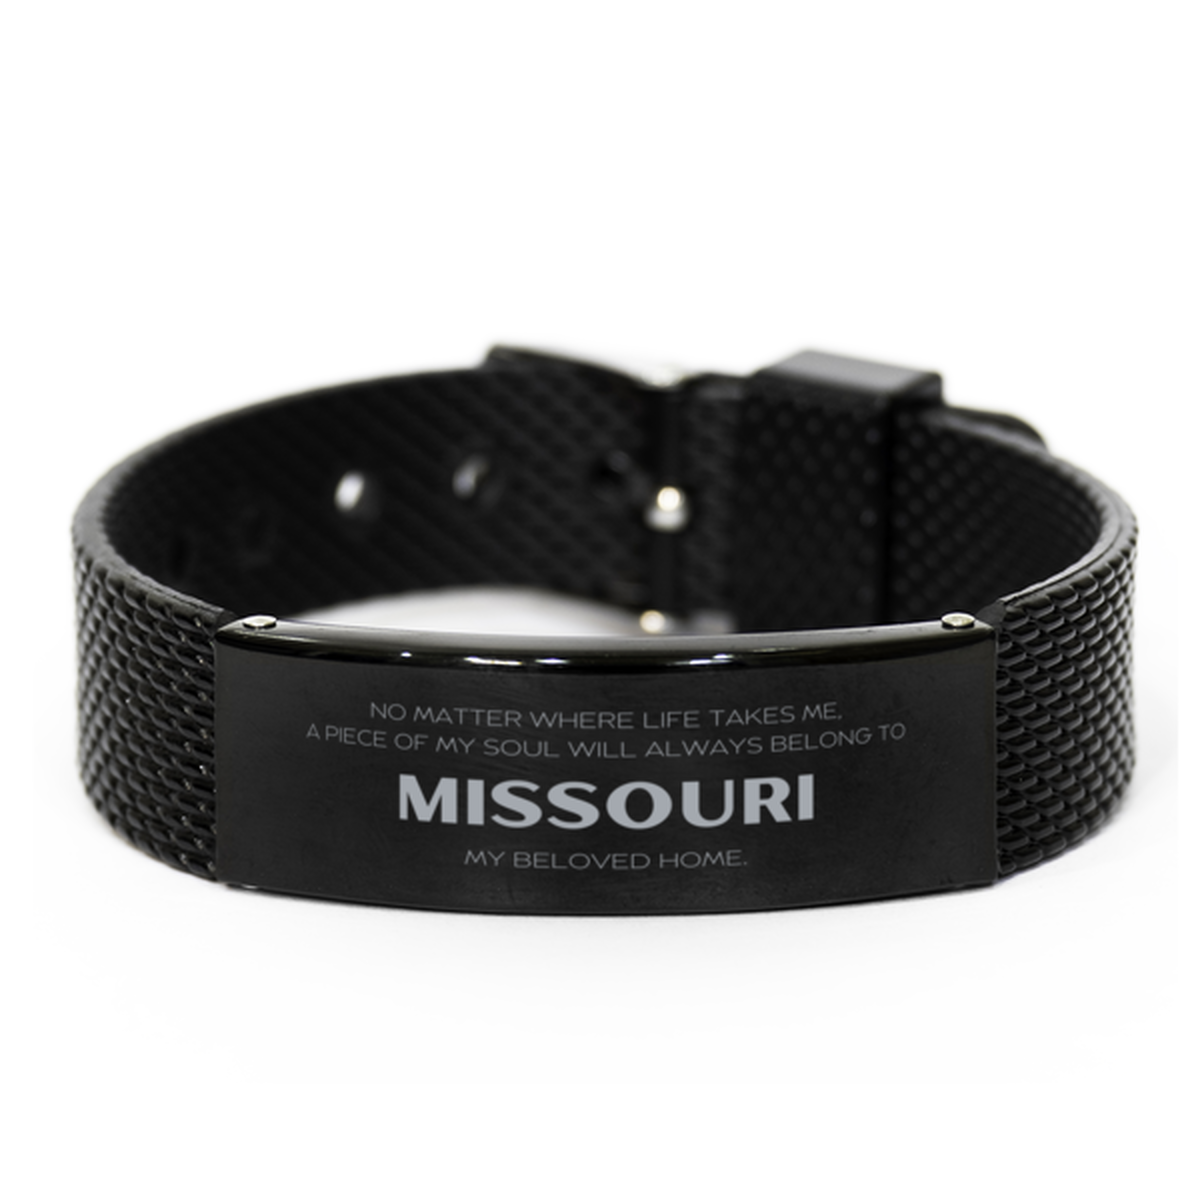 Love Missouri State Gifts, My soul will always belong to Missouri, Proud Black Shark Mesh Bracelet, Birthday Unique Gifts For Missouri Men, Women, Friends